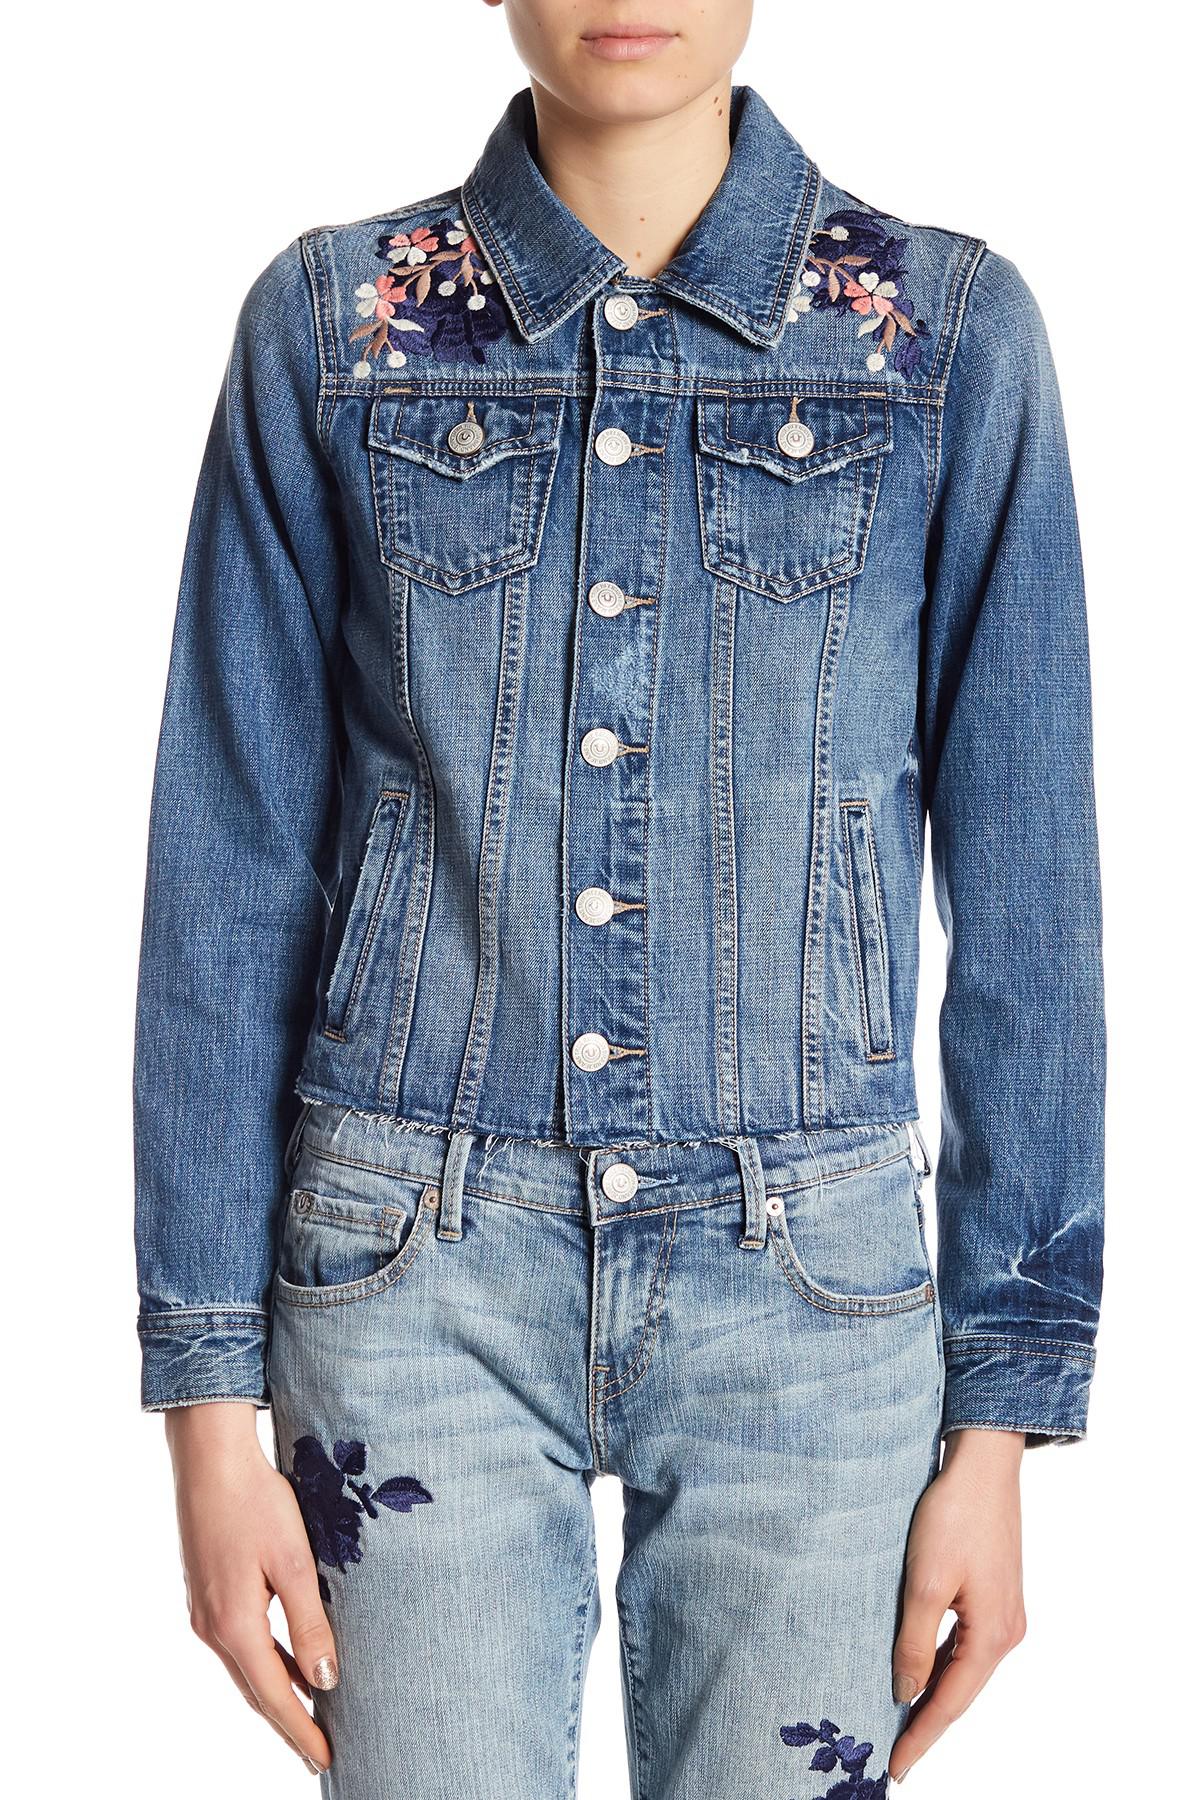 Lyst - True Religion Danni Floral Embroidered Denim Jacket in Blue